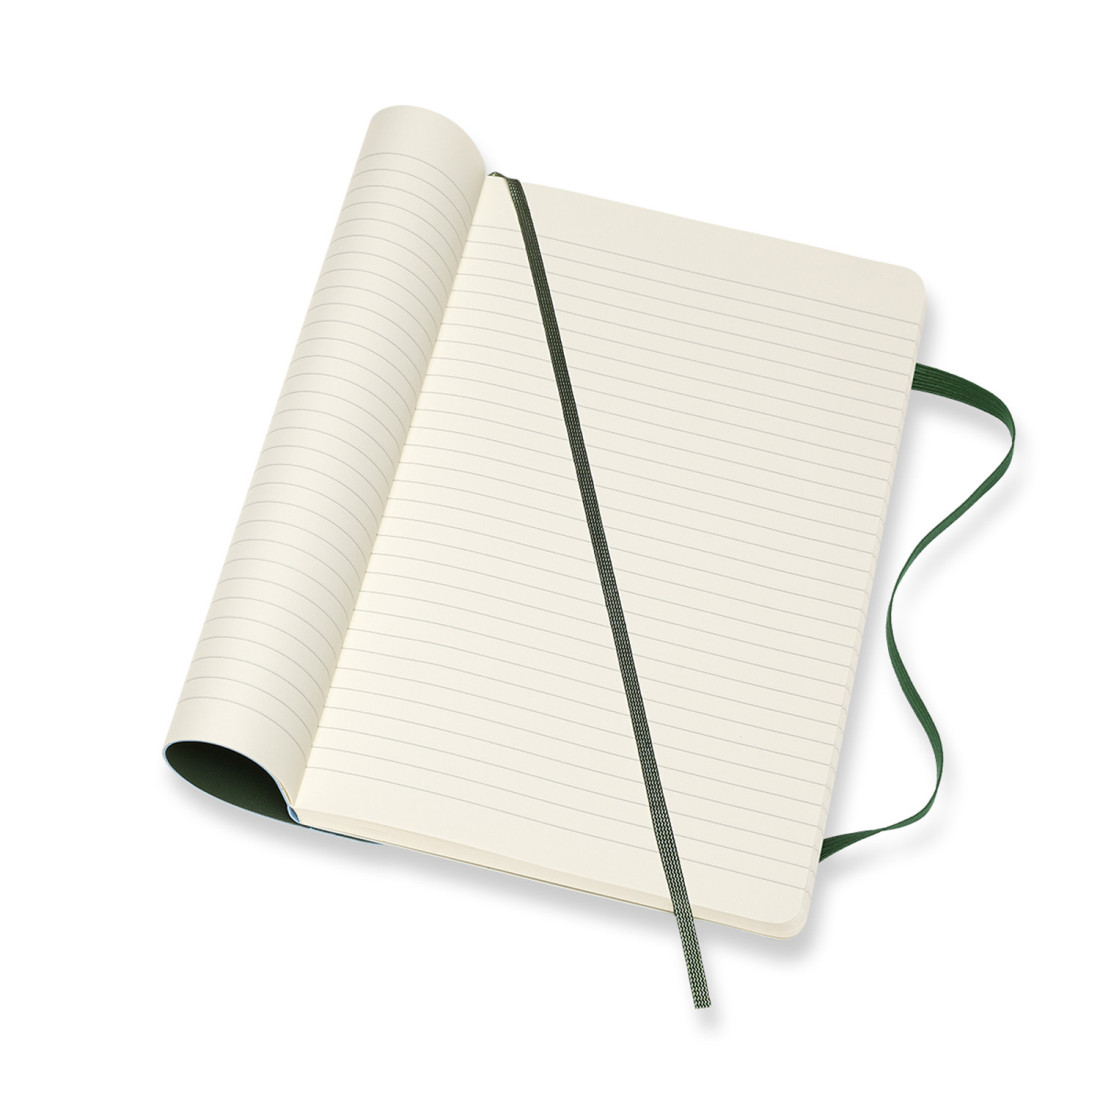 Moleskine Notebook Large 13x21 Ruled Myrtle Green Hard Cover